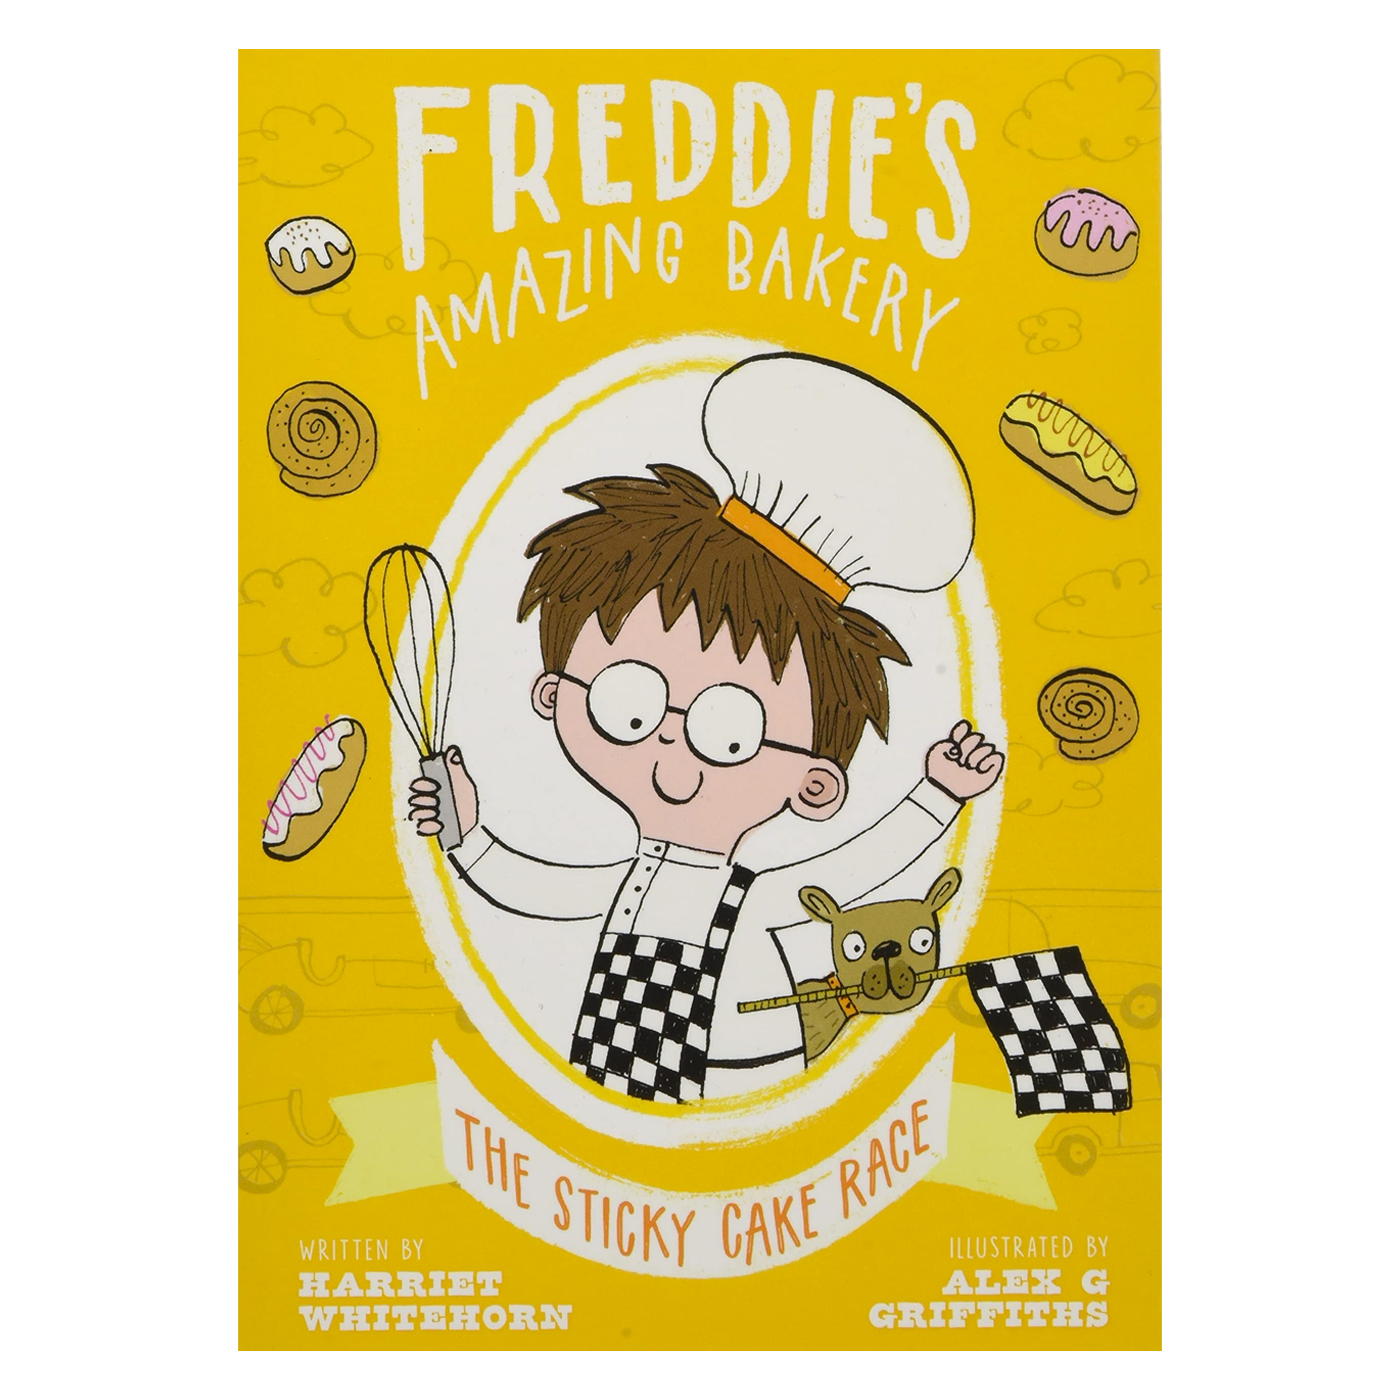  Freddie's Amazing Bakery: The Sticky Cake Race